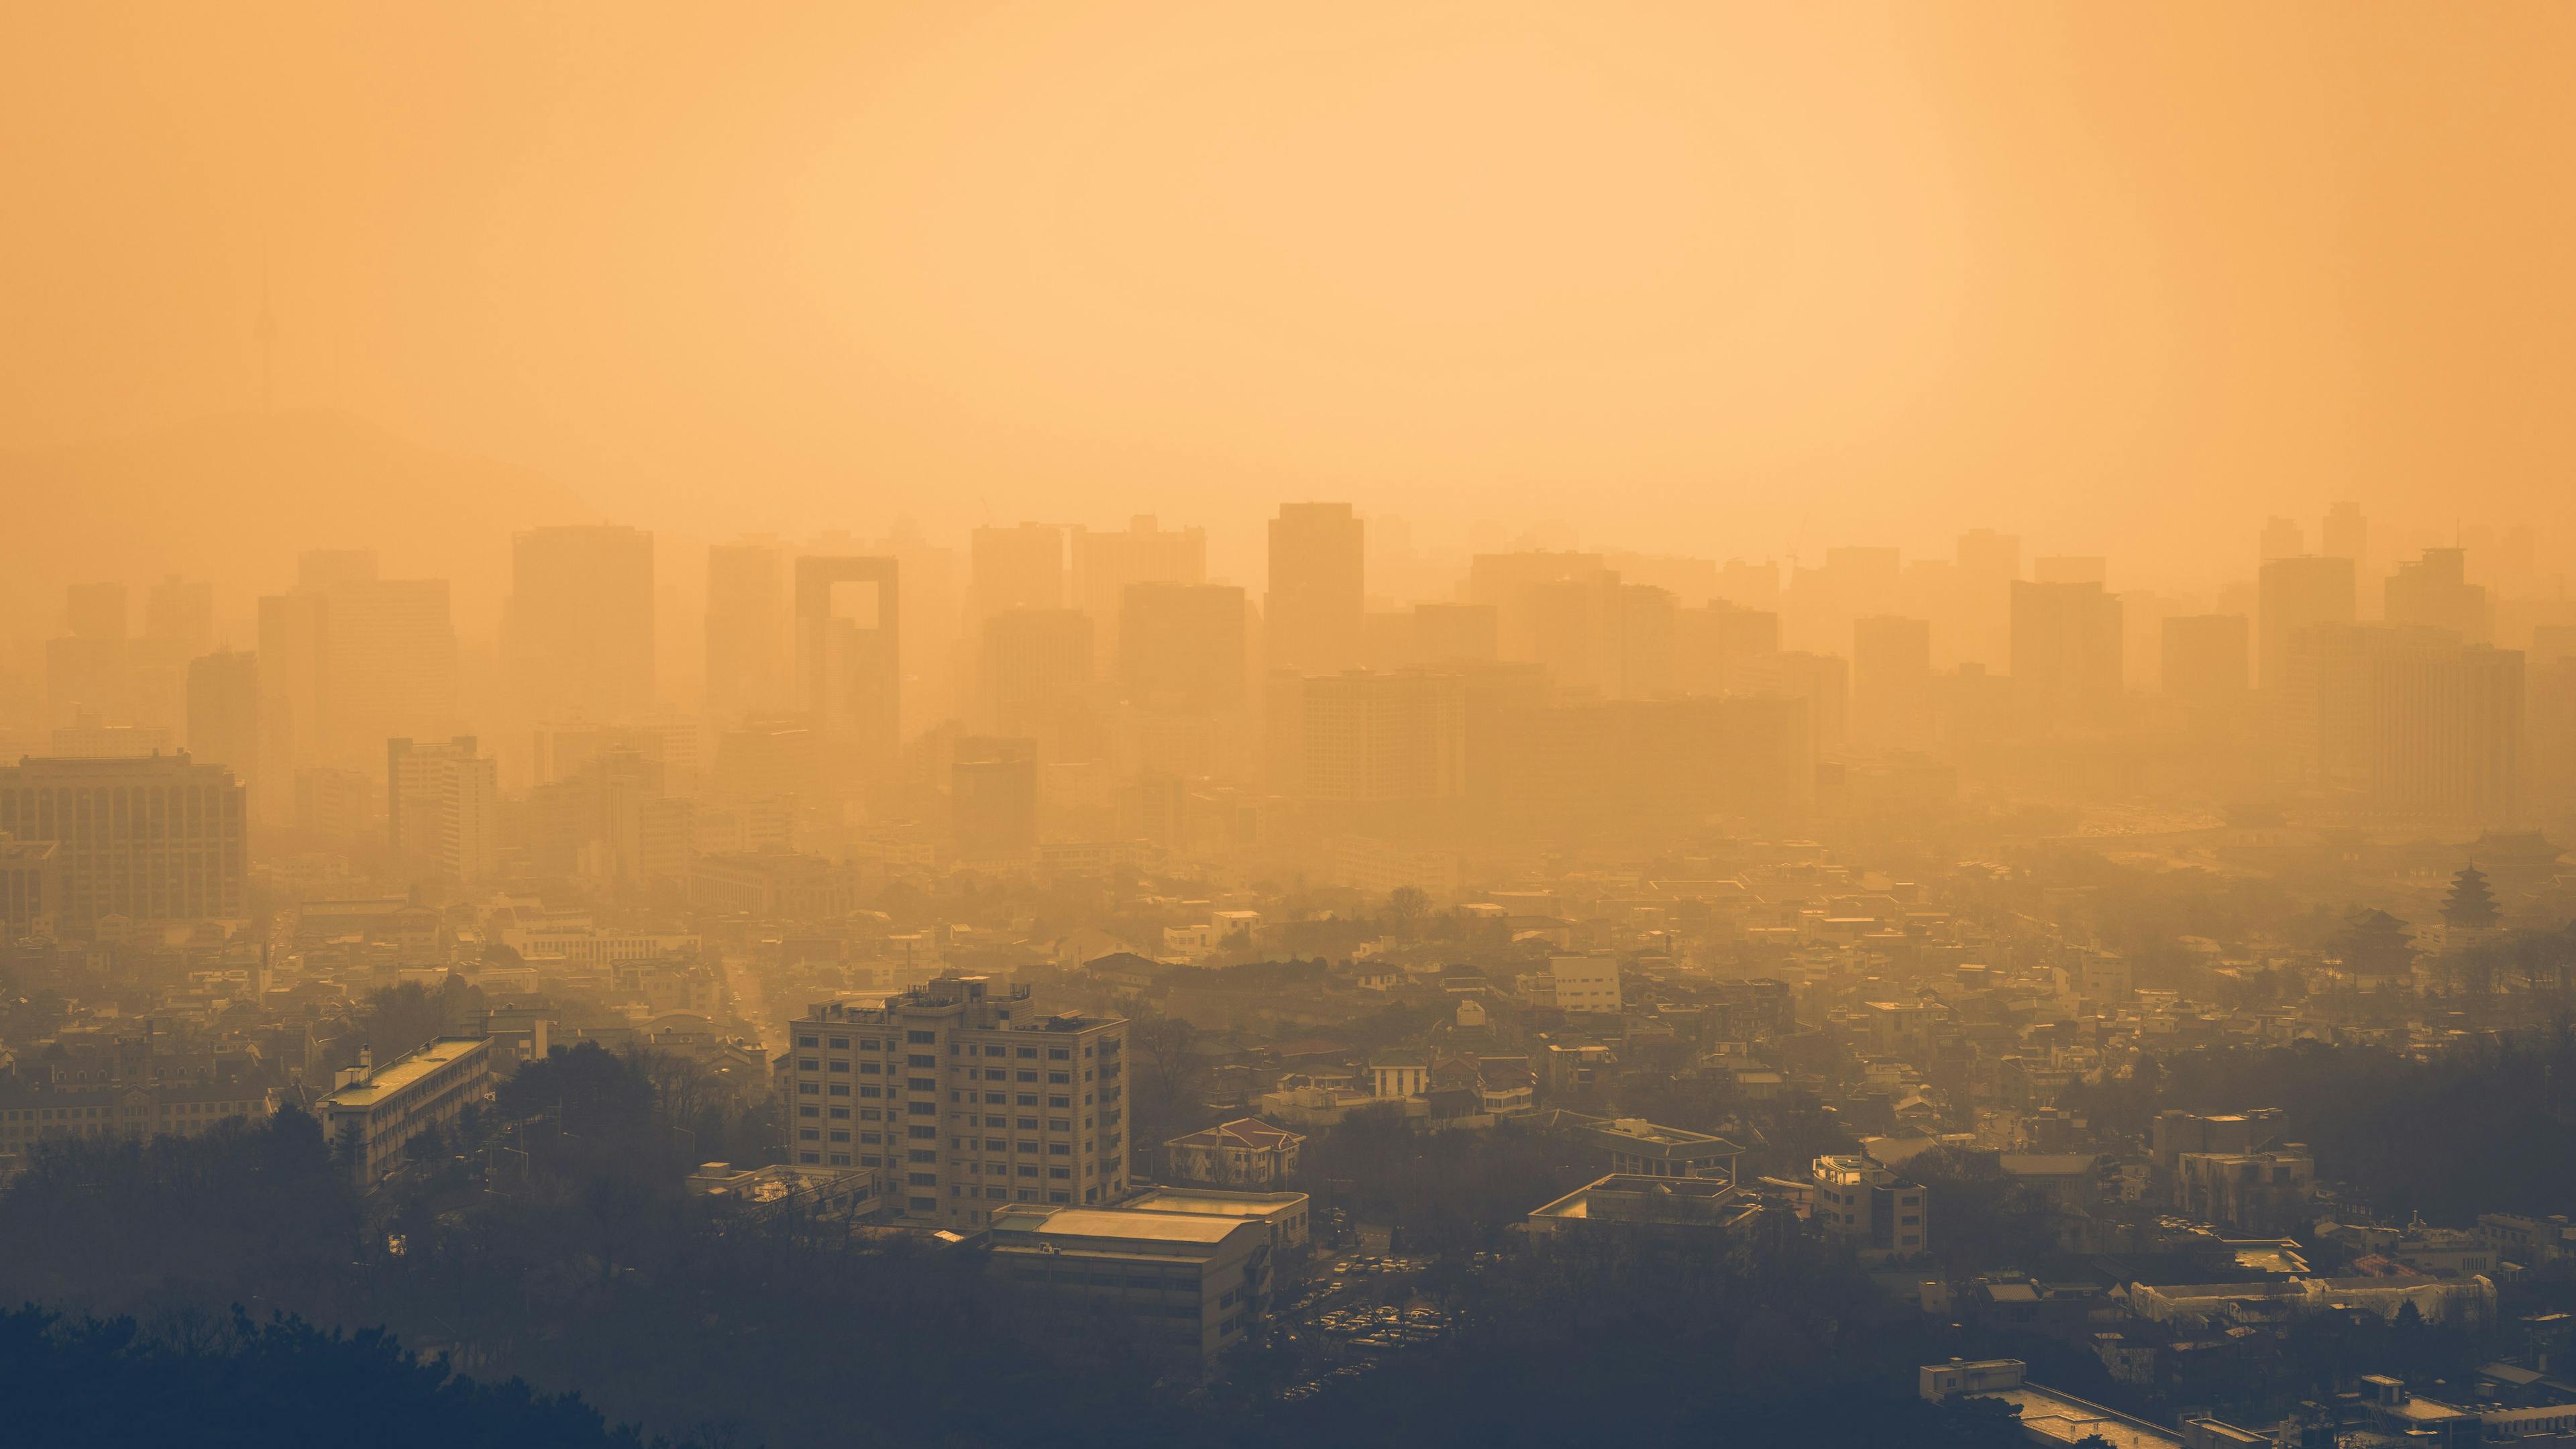 City fine dust | Image Credit: © ttlsc - stock.adobe.com